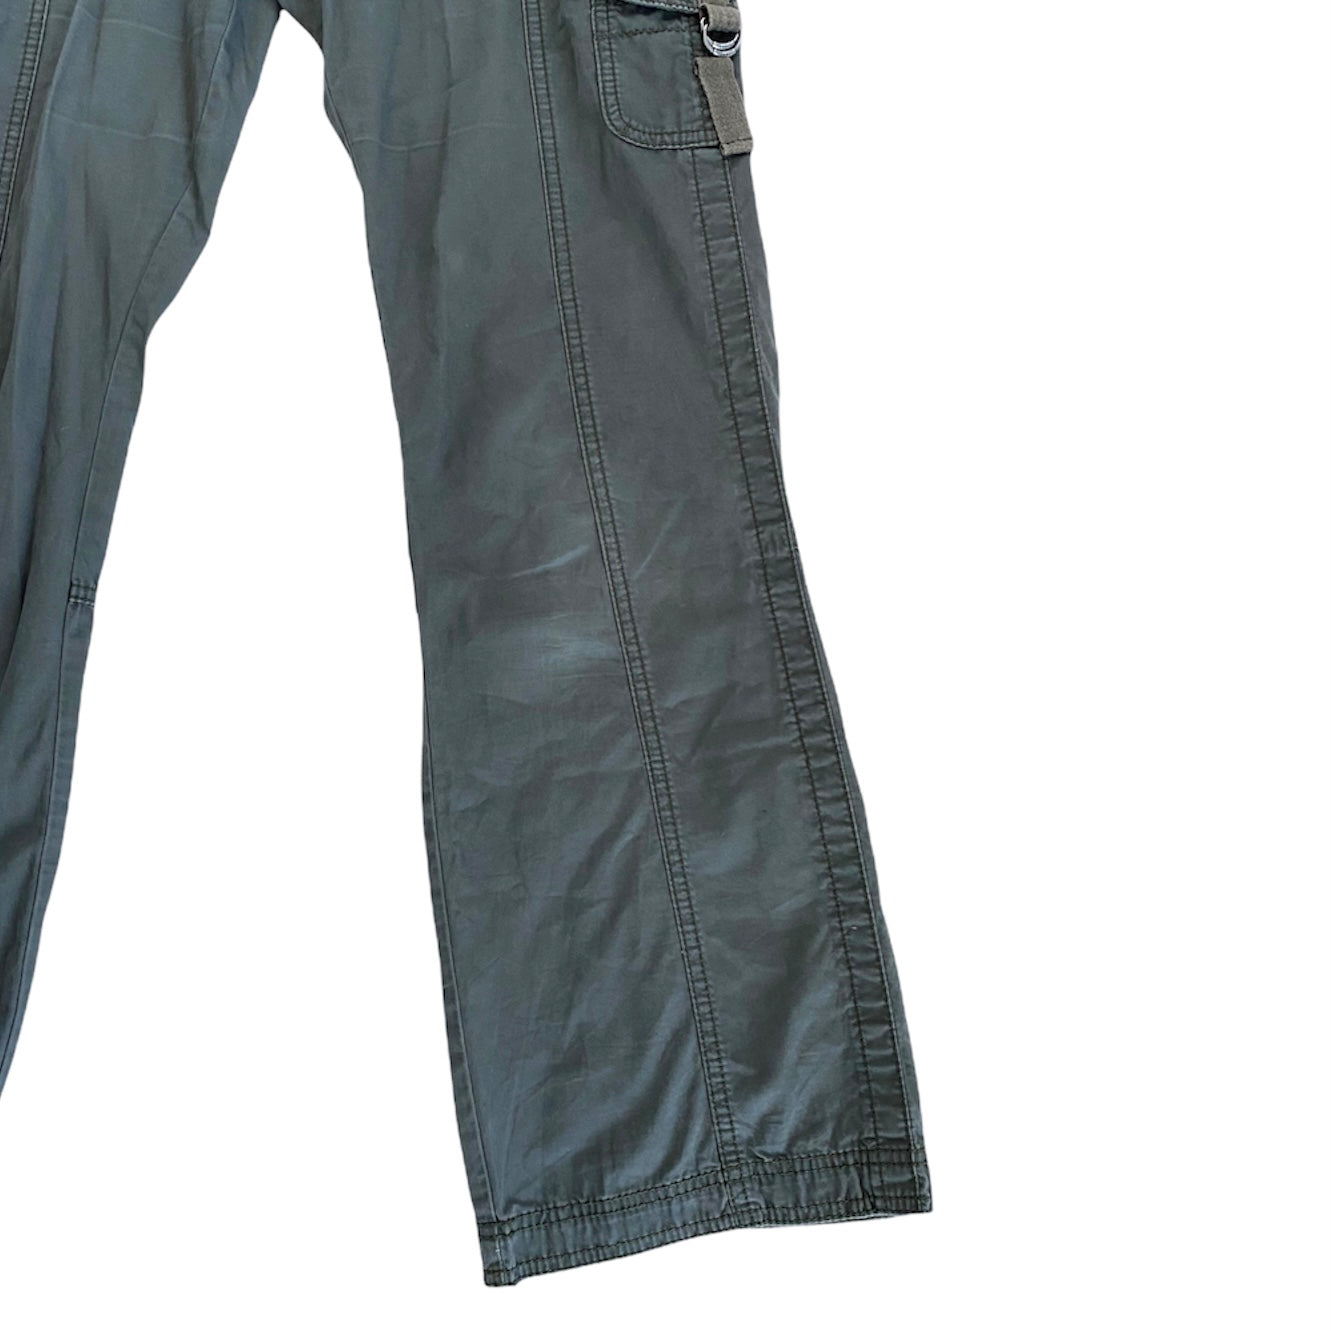 Esprit EDC Khaki Cargo Pants